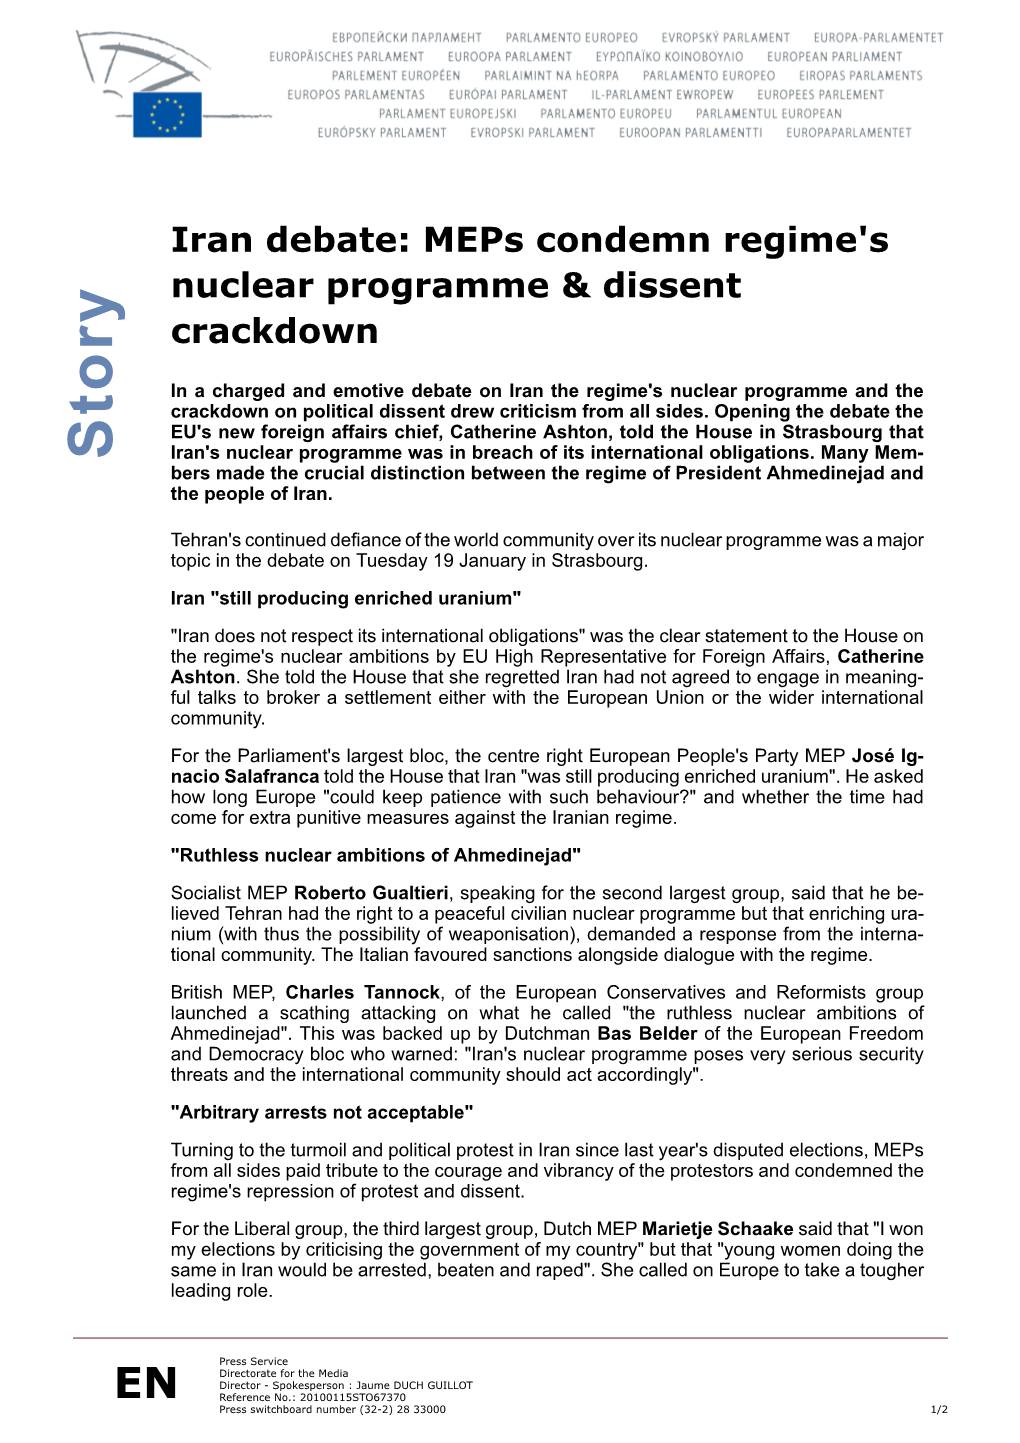 Meps Condemn Regime's Nuclear Programme & Dissent Crackdown